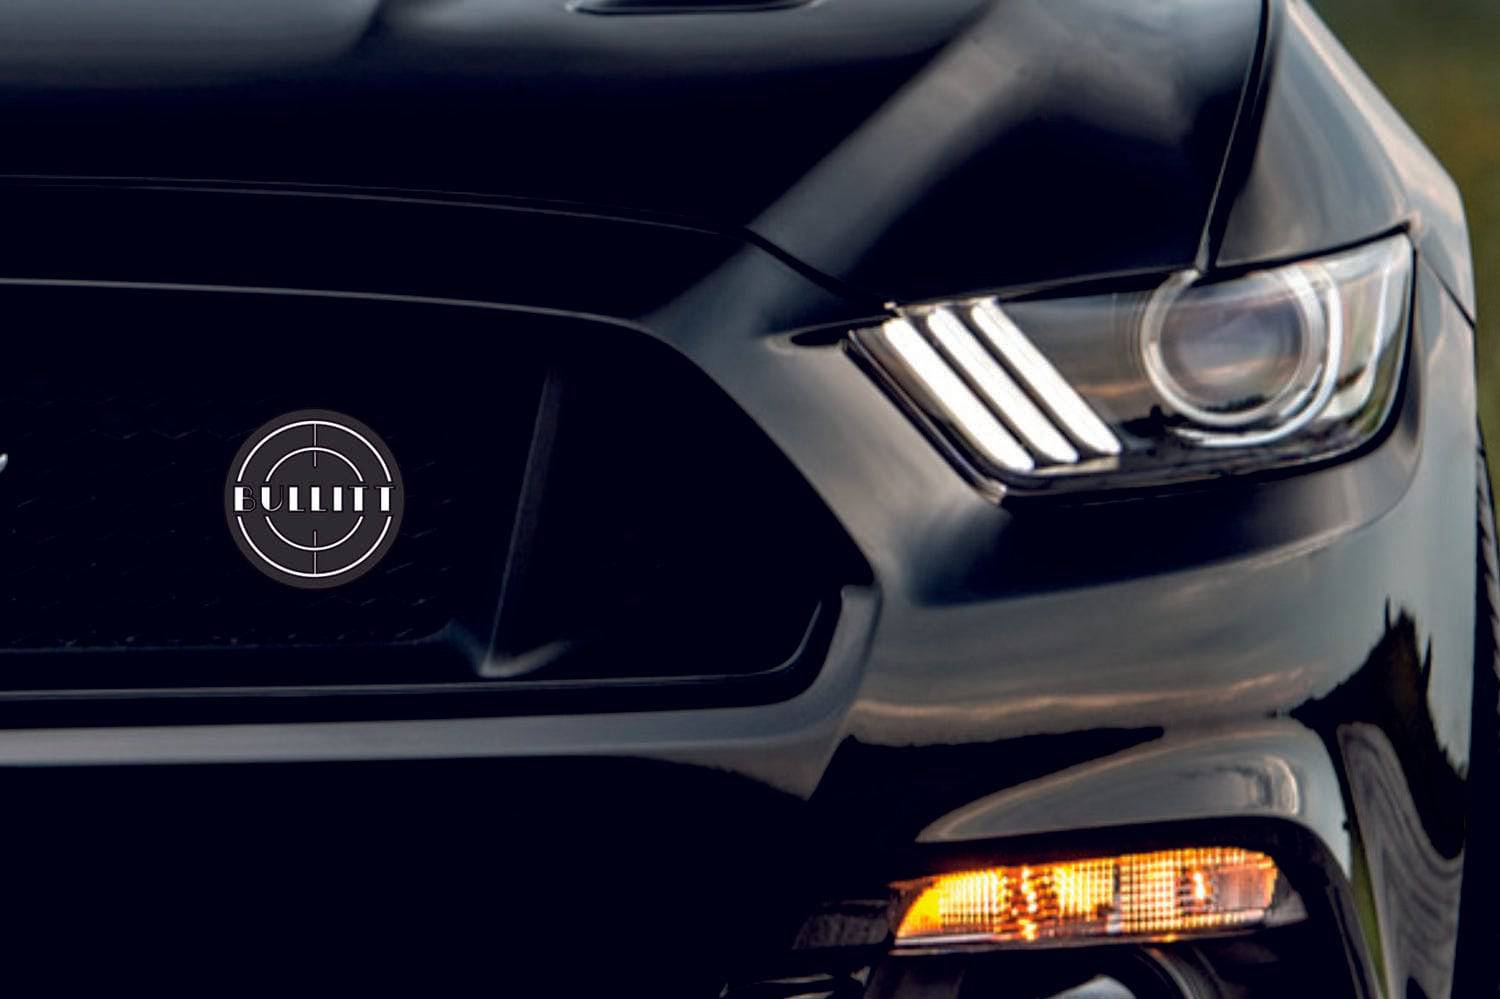 Ford Radiator grille emblem with Bullitt logo - decoinfabric